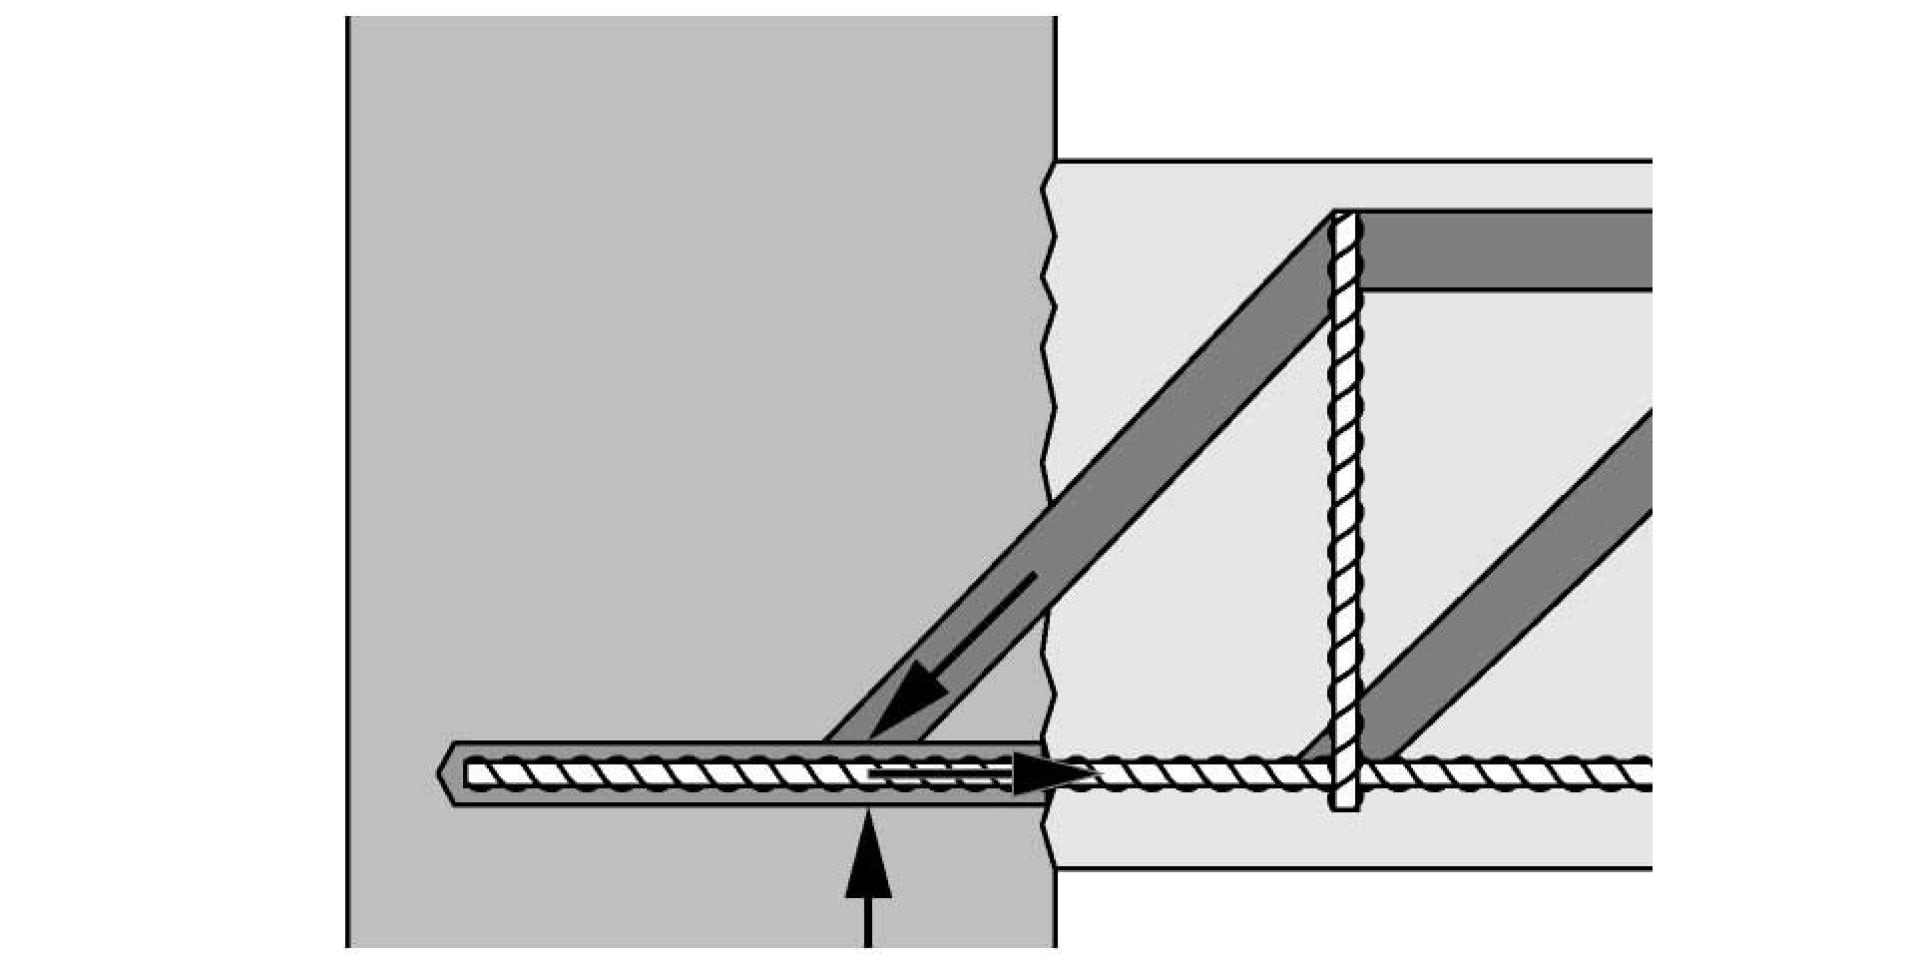 Post installed rebar anchorage length Hilti HIT rebar design method